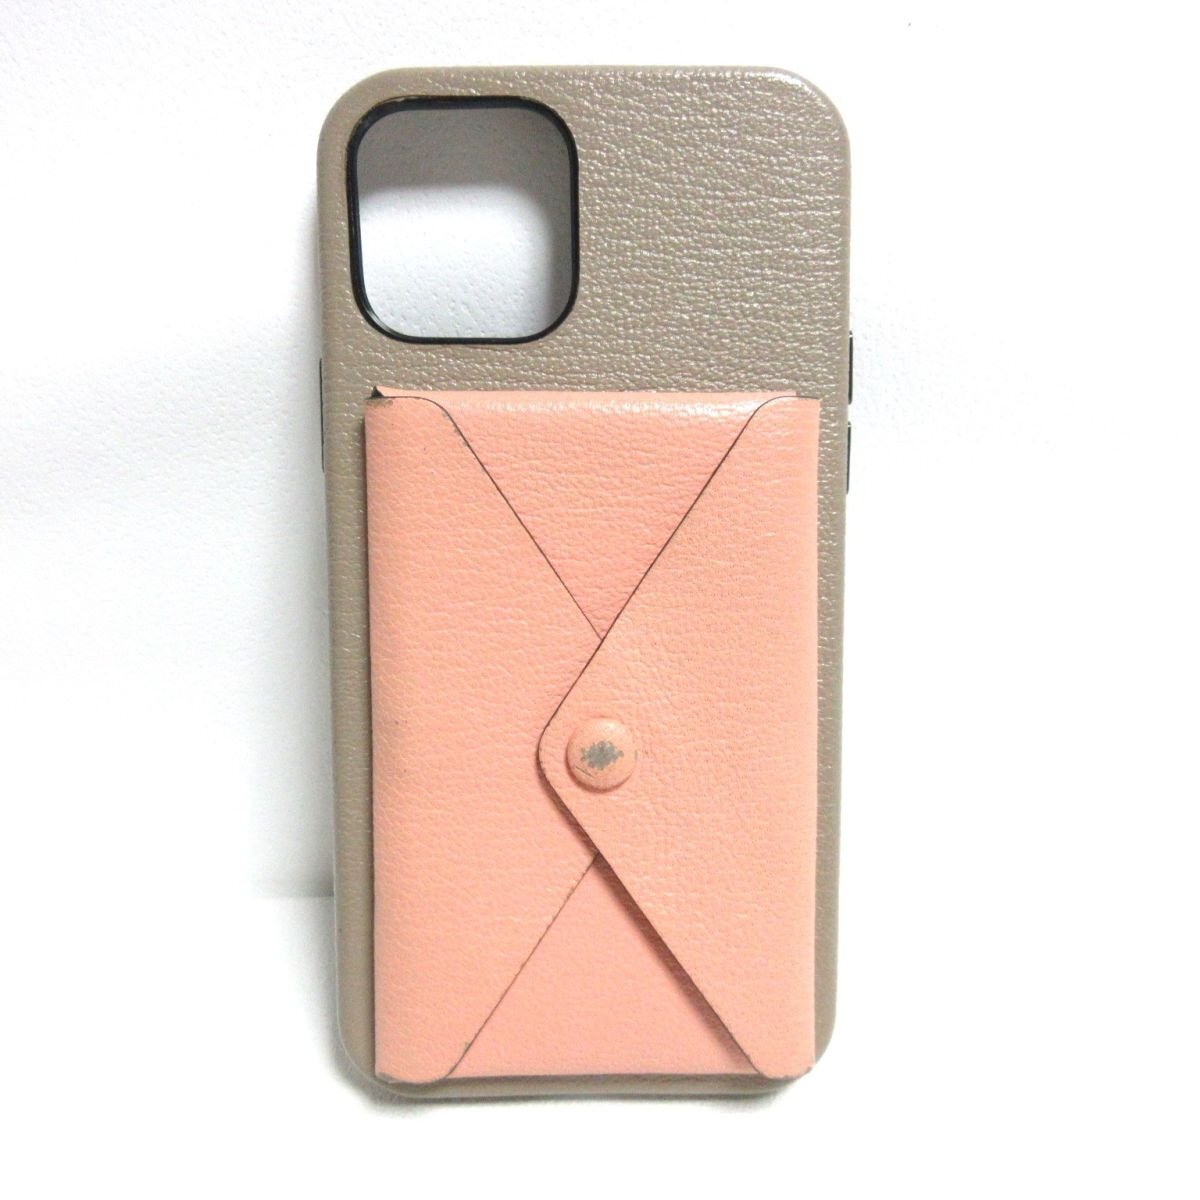  beautiful goods BONAVENTURAbona Ventura leather with pocket smartphone case iphone12/12pro for gray ju× pink *